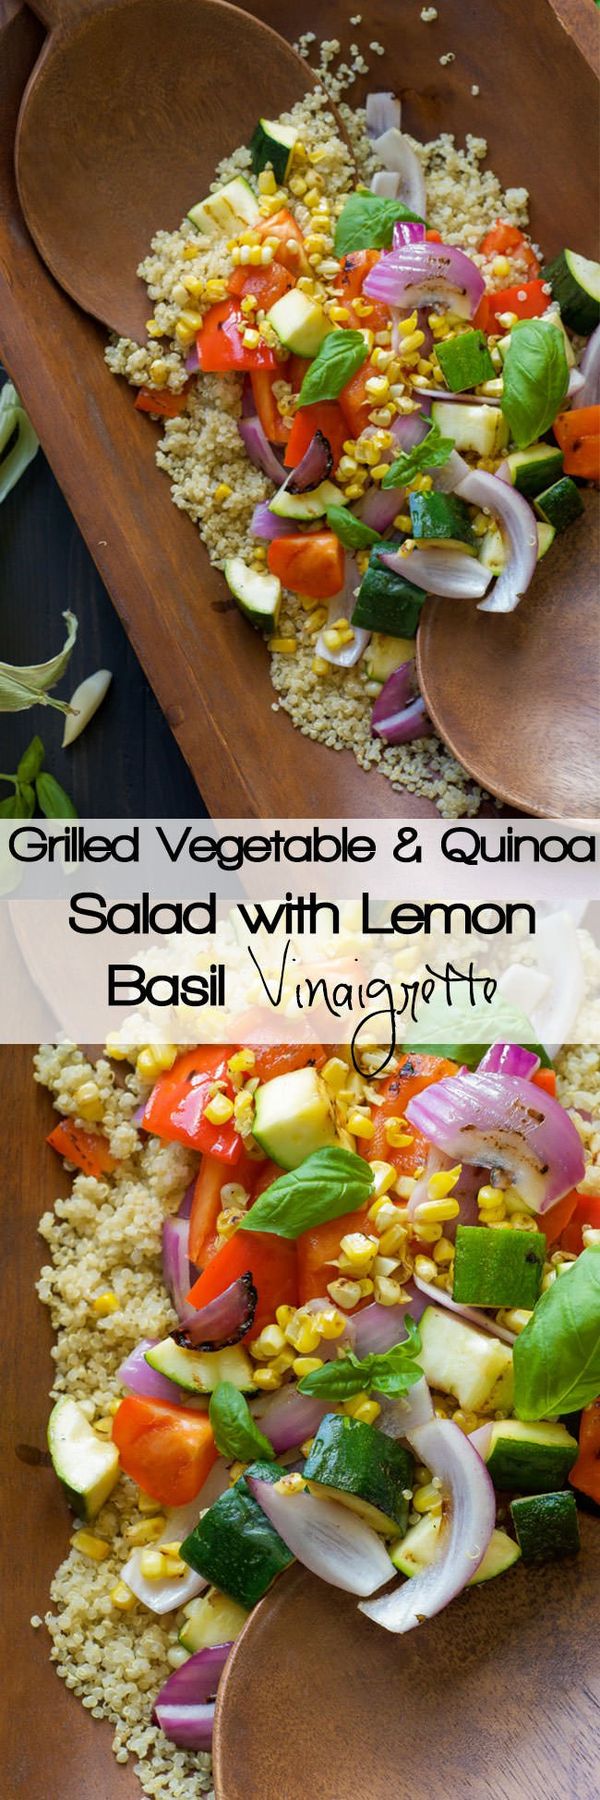 Grilled Summer Vegetable Quinoa Salad with Lemon Basil Vinaigrette